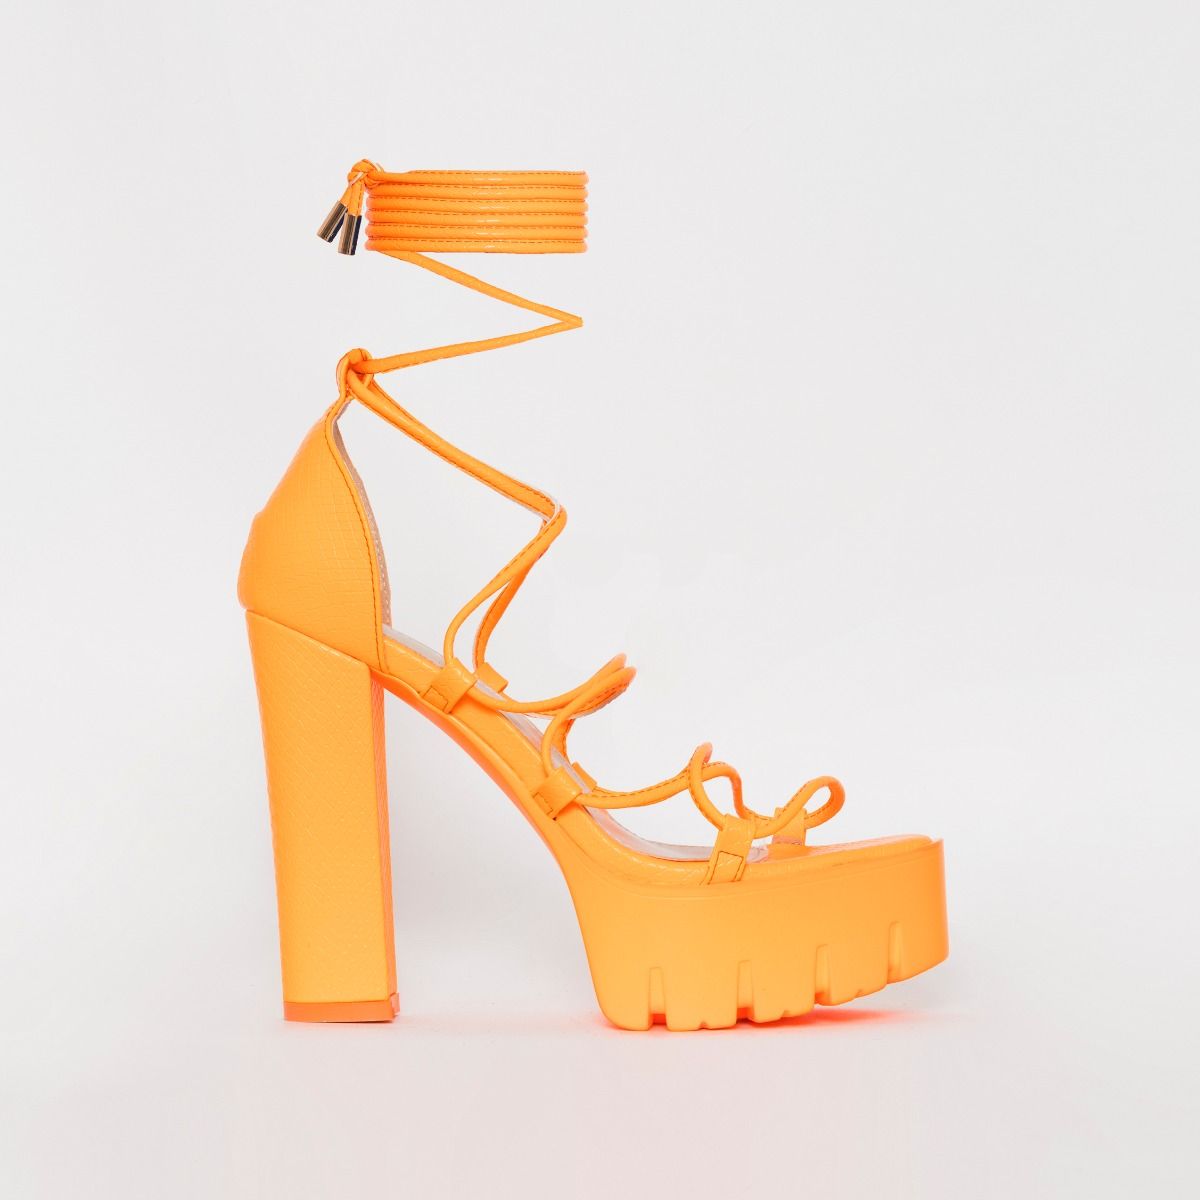 orange snake heels